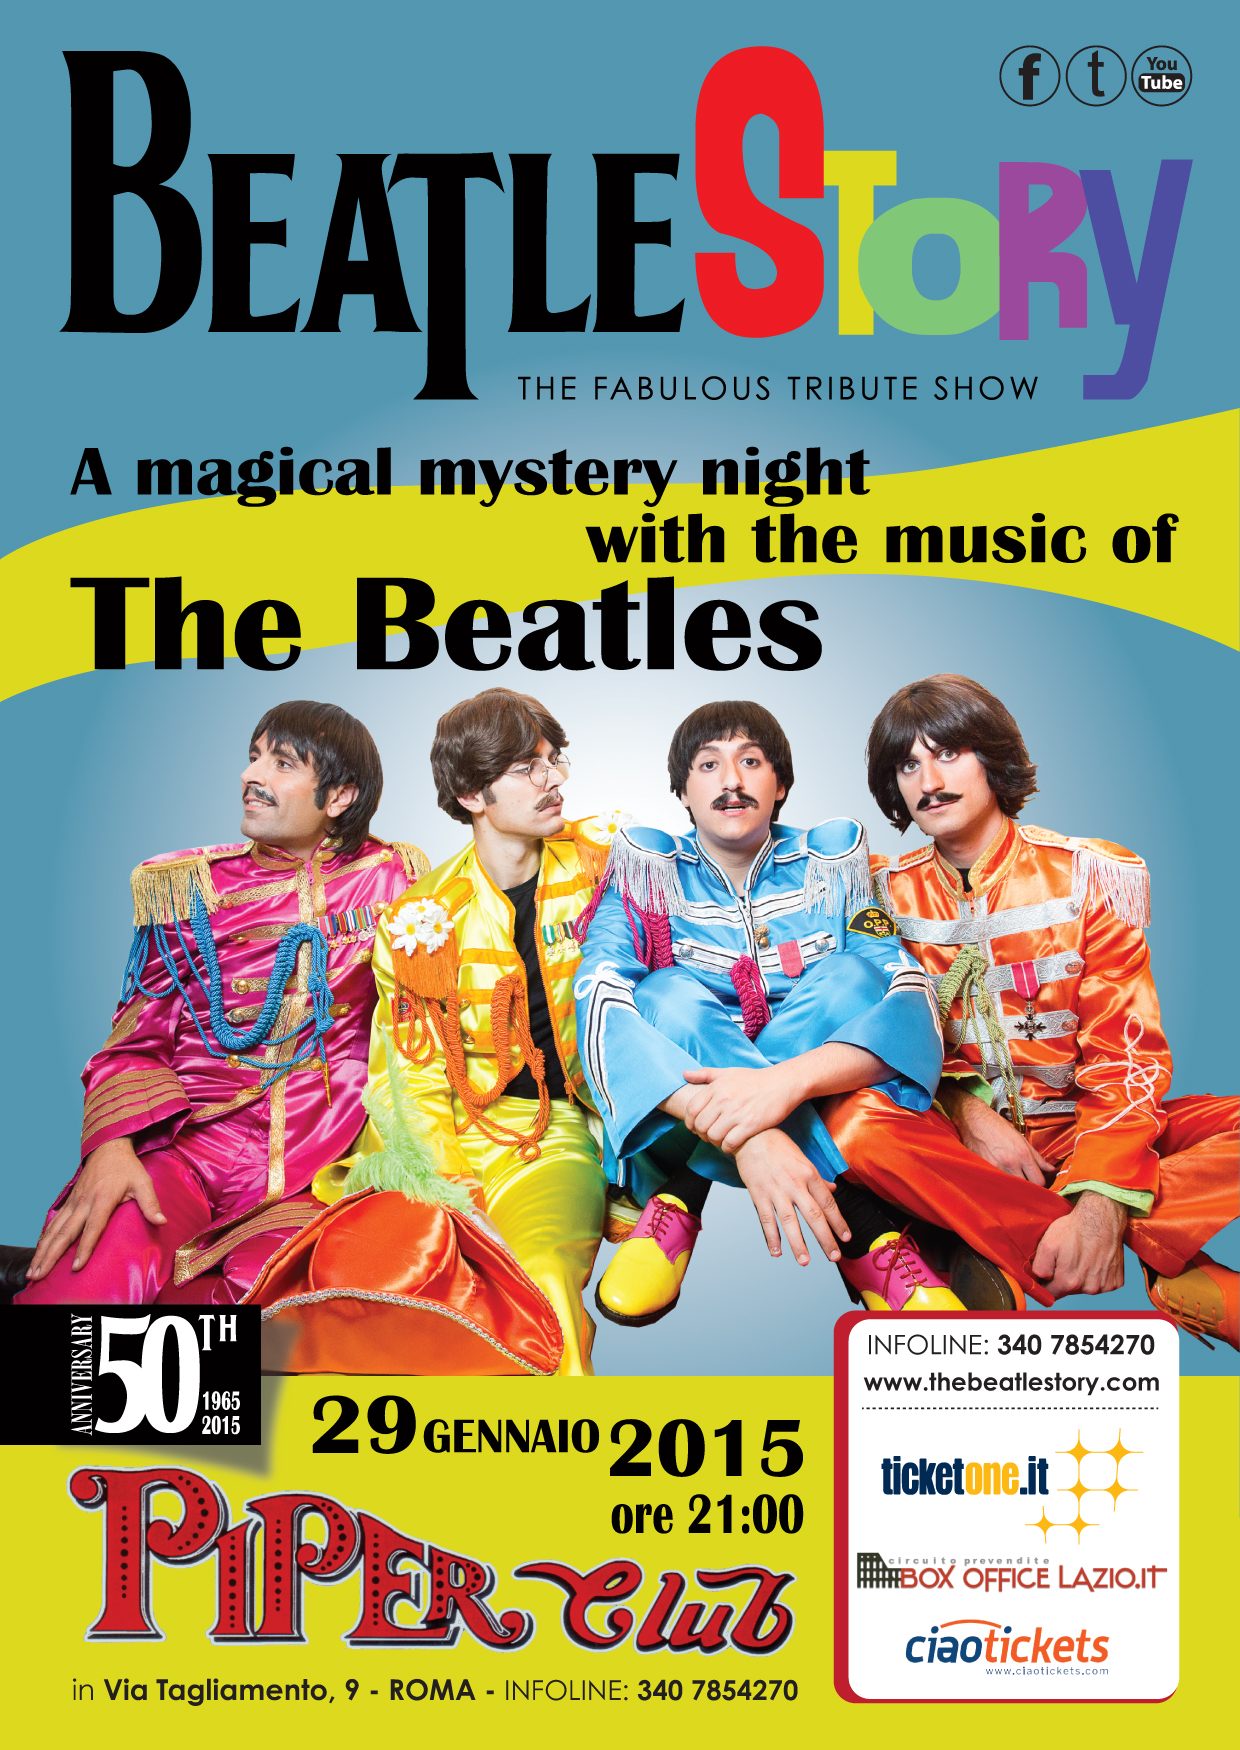 BeatleStory: The Fabulous Tribute Show